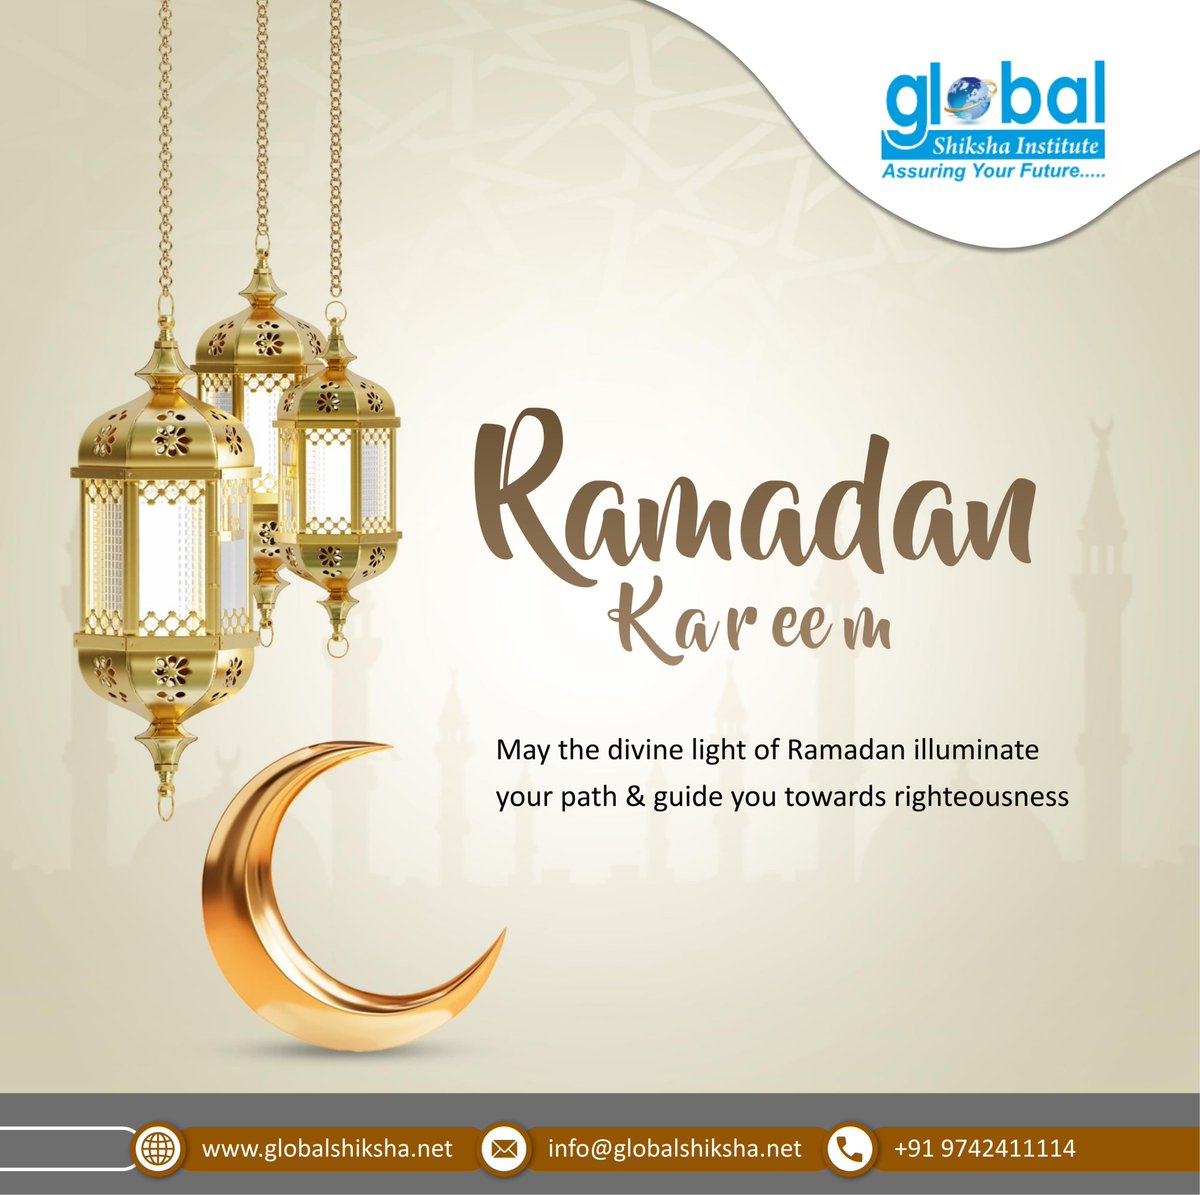 Ramadan Kareem🌙✨
May the divine light of Ramadan illuminate your path & guide you towards righteousness
#RamadanMubarak #RamadanKareem #RamadanBlessings #Healing #Renewal #Transformation #SpiritualJourney #IslamicTraditions #BlessedMonth #FastingMonth #PrayerAndReflection